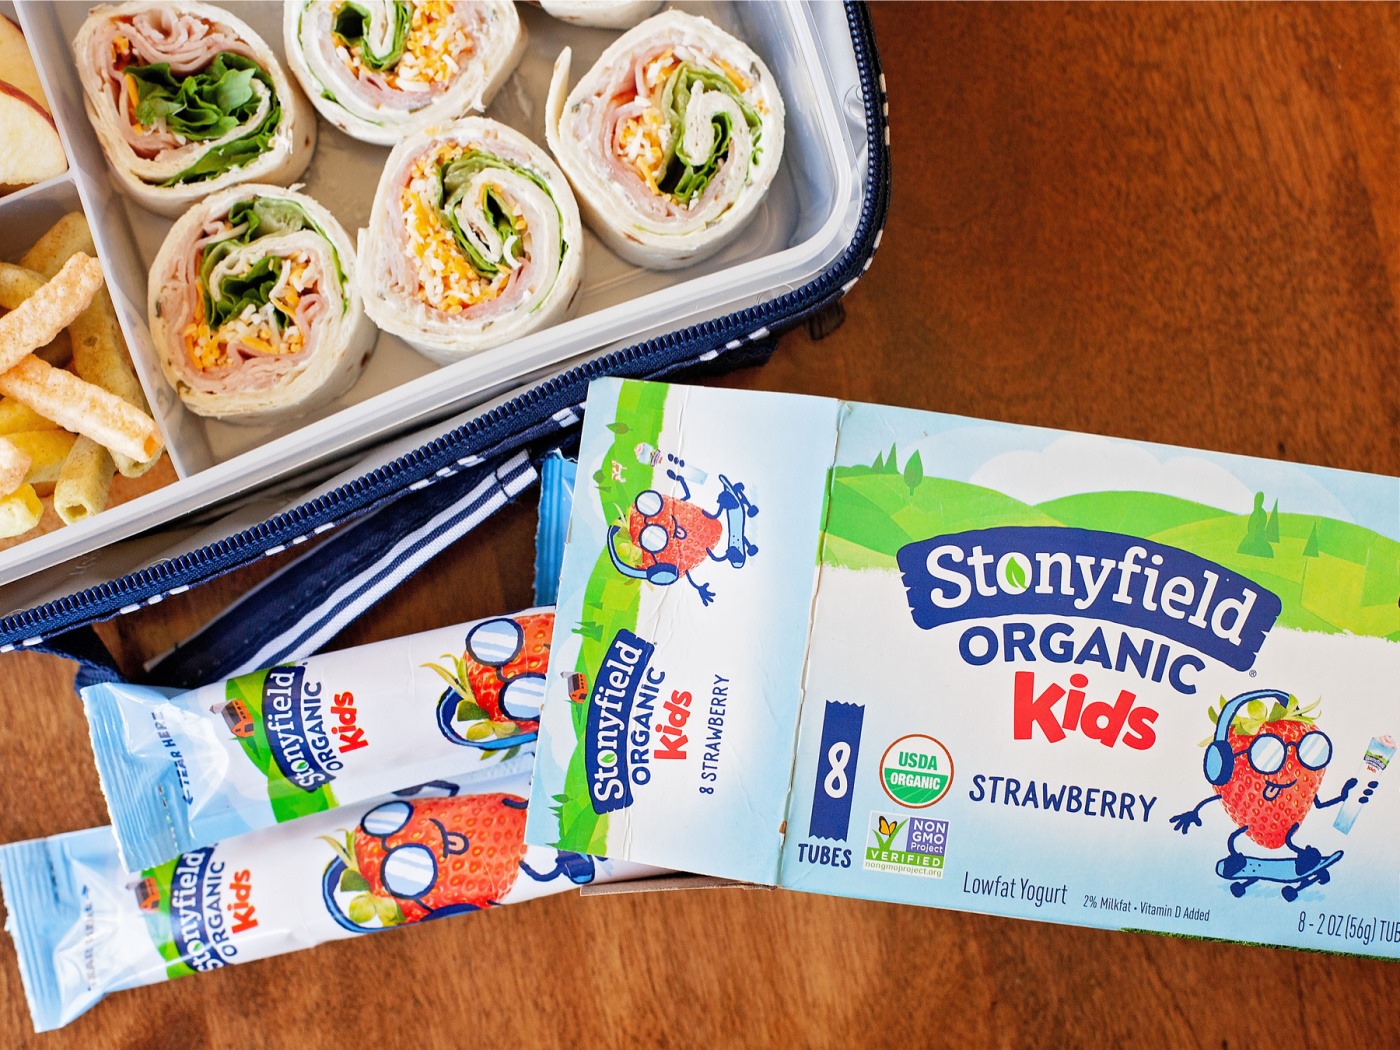 Stonyfield Kids Yogurt As Low As 20¢ Per Pack At Publix